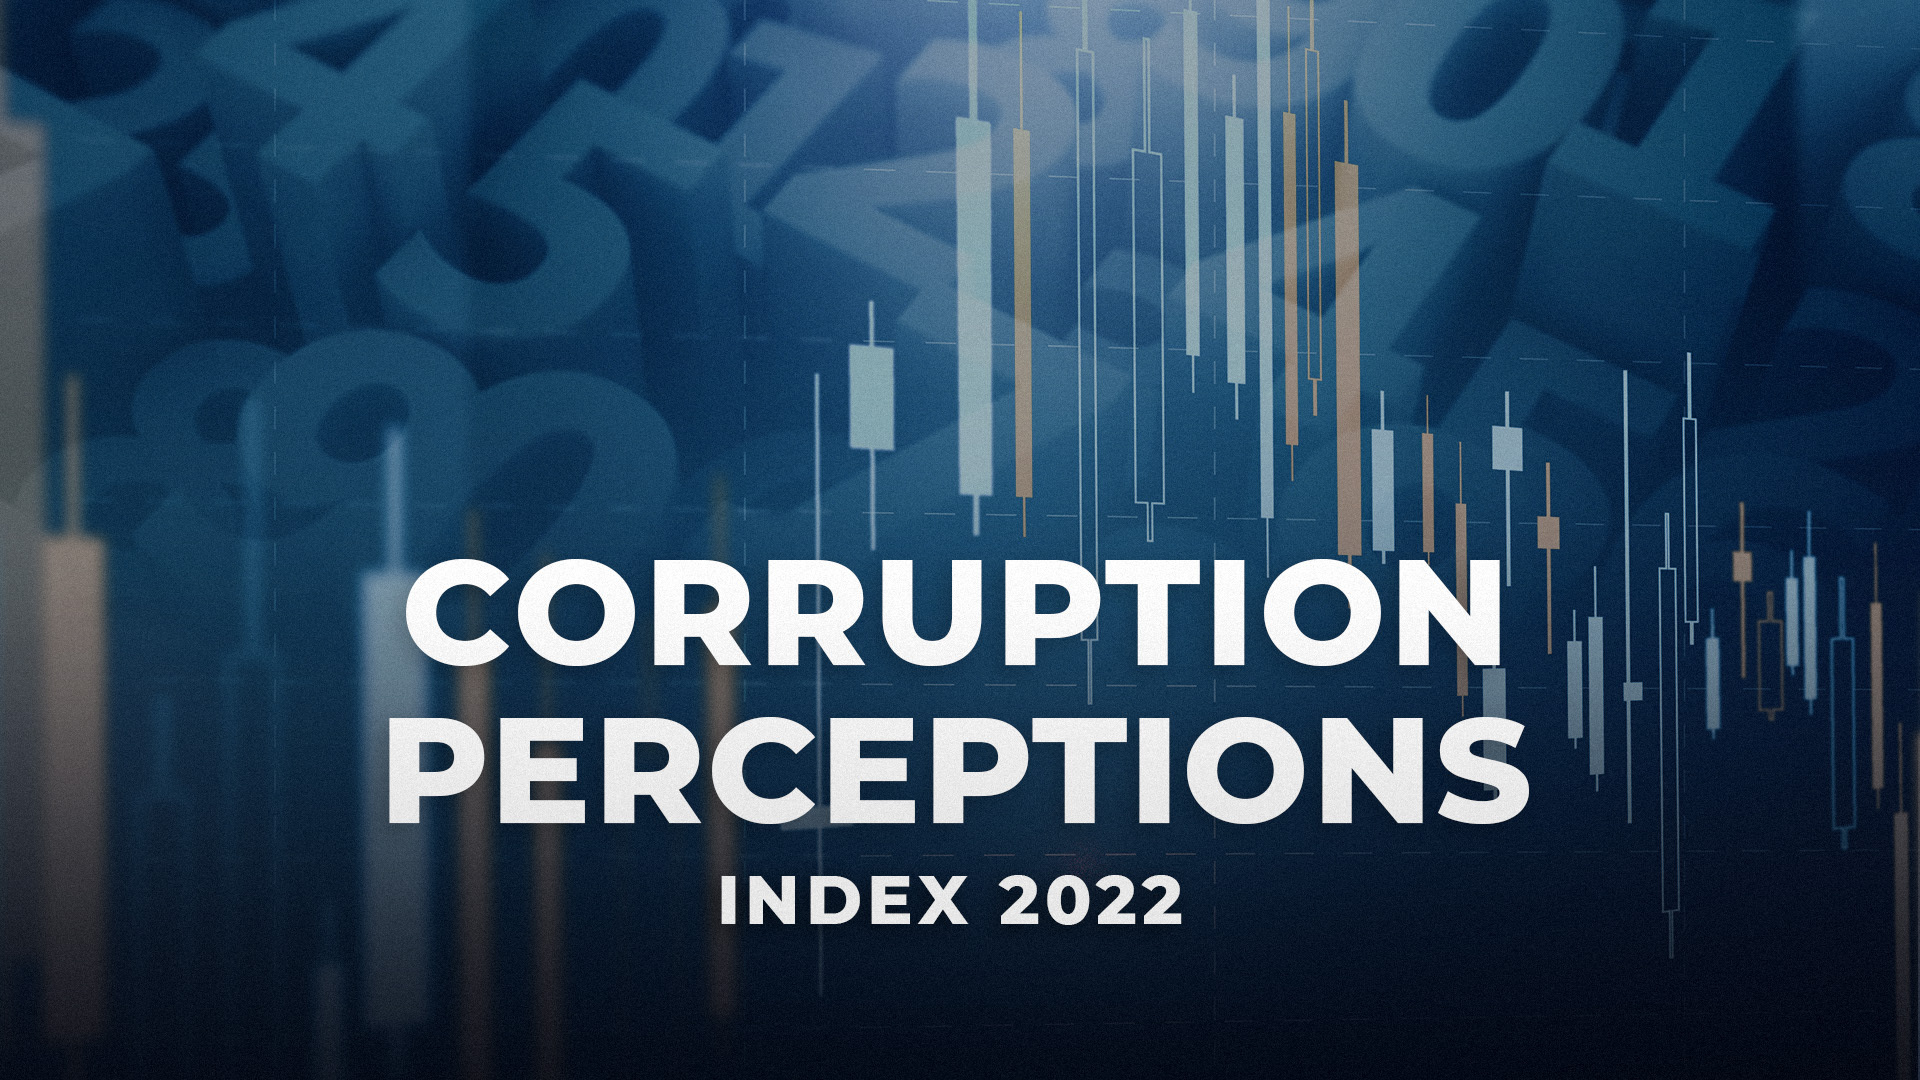 Corruption Perceptions Index 2022: Small Gain for Ukraine